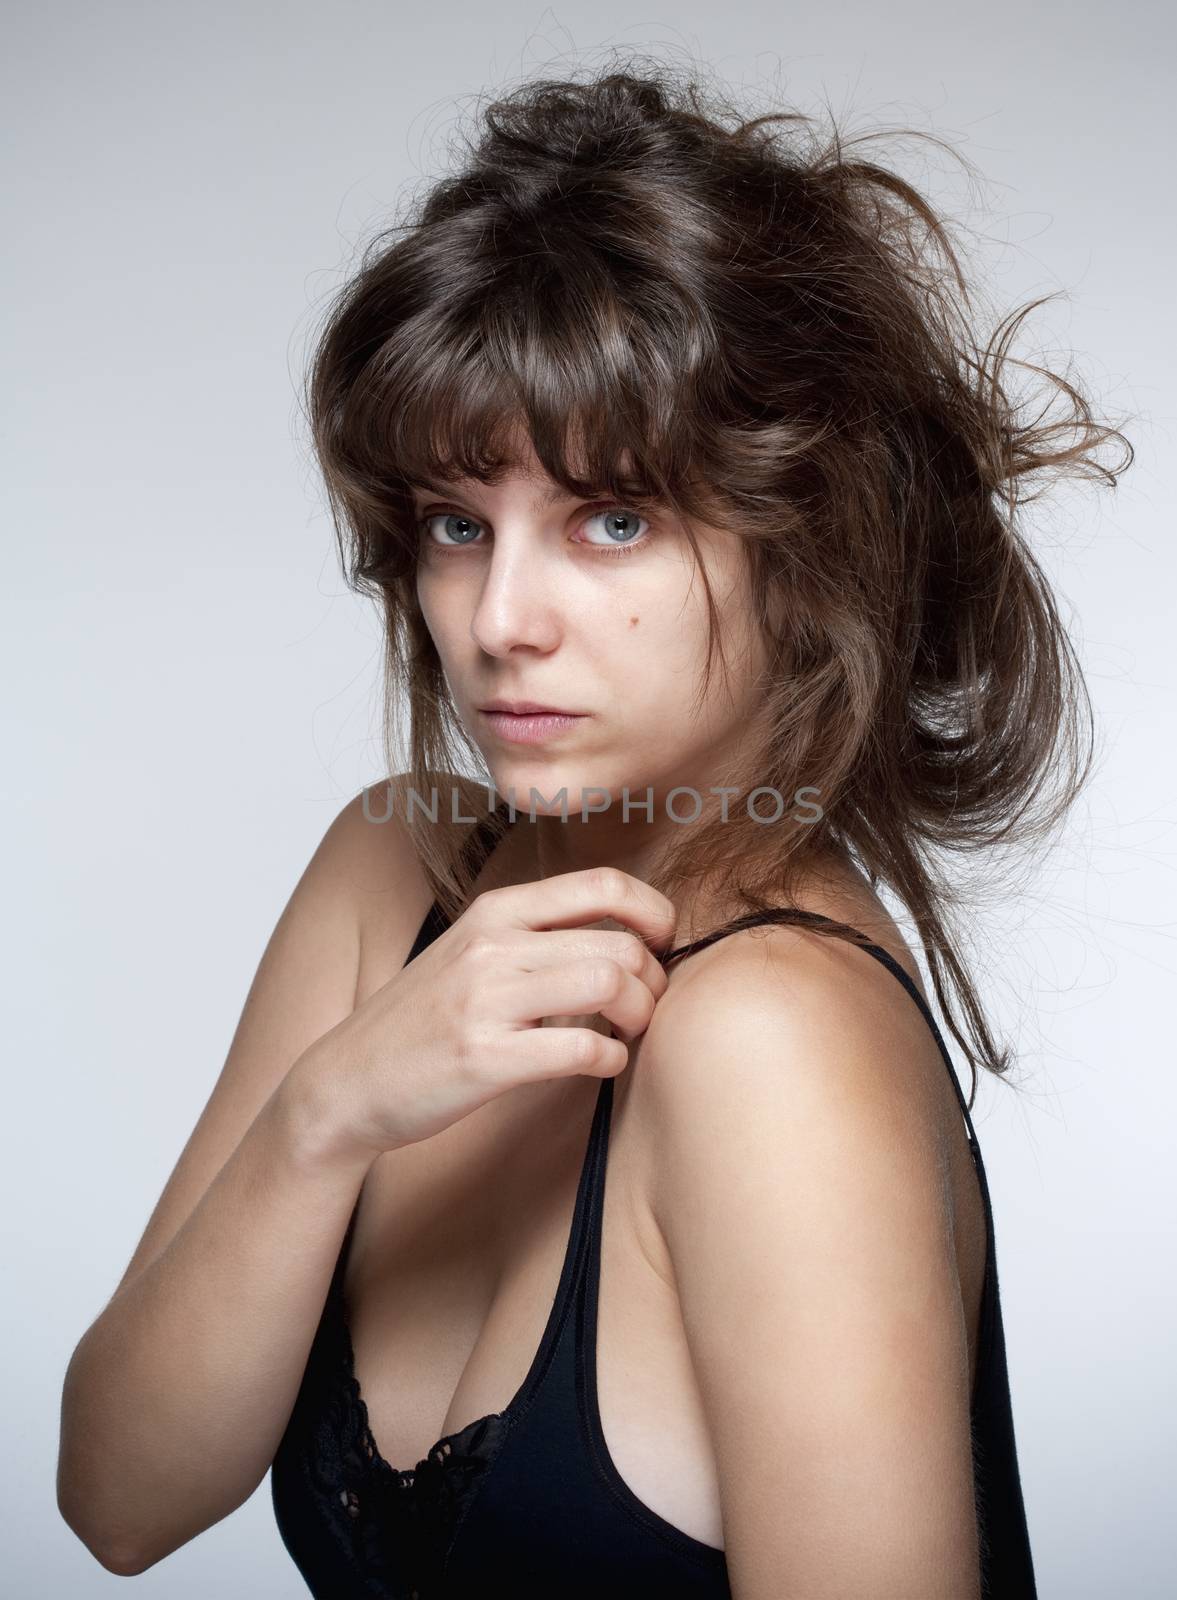 Portrait of a Young Sensual Woman by courtyardpix